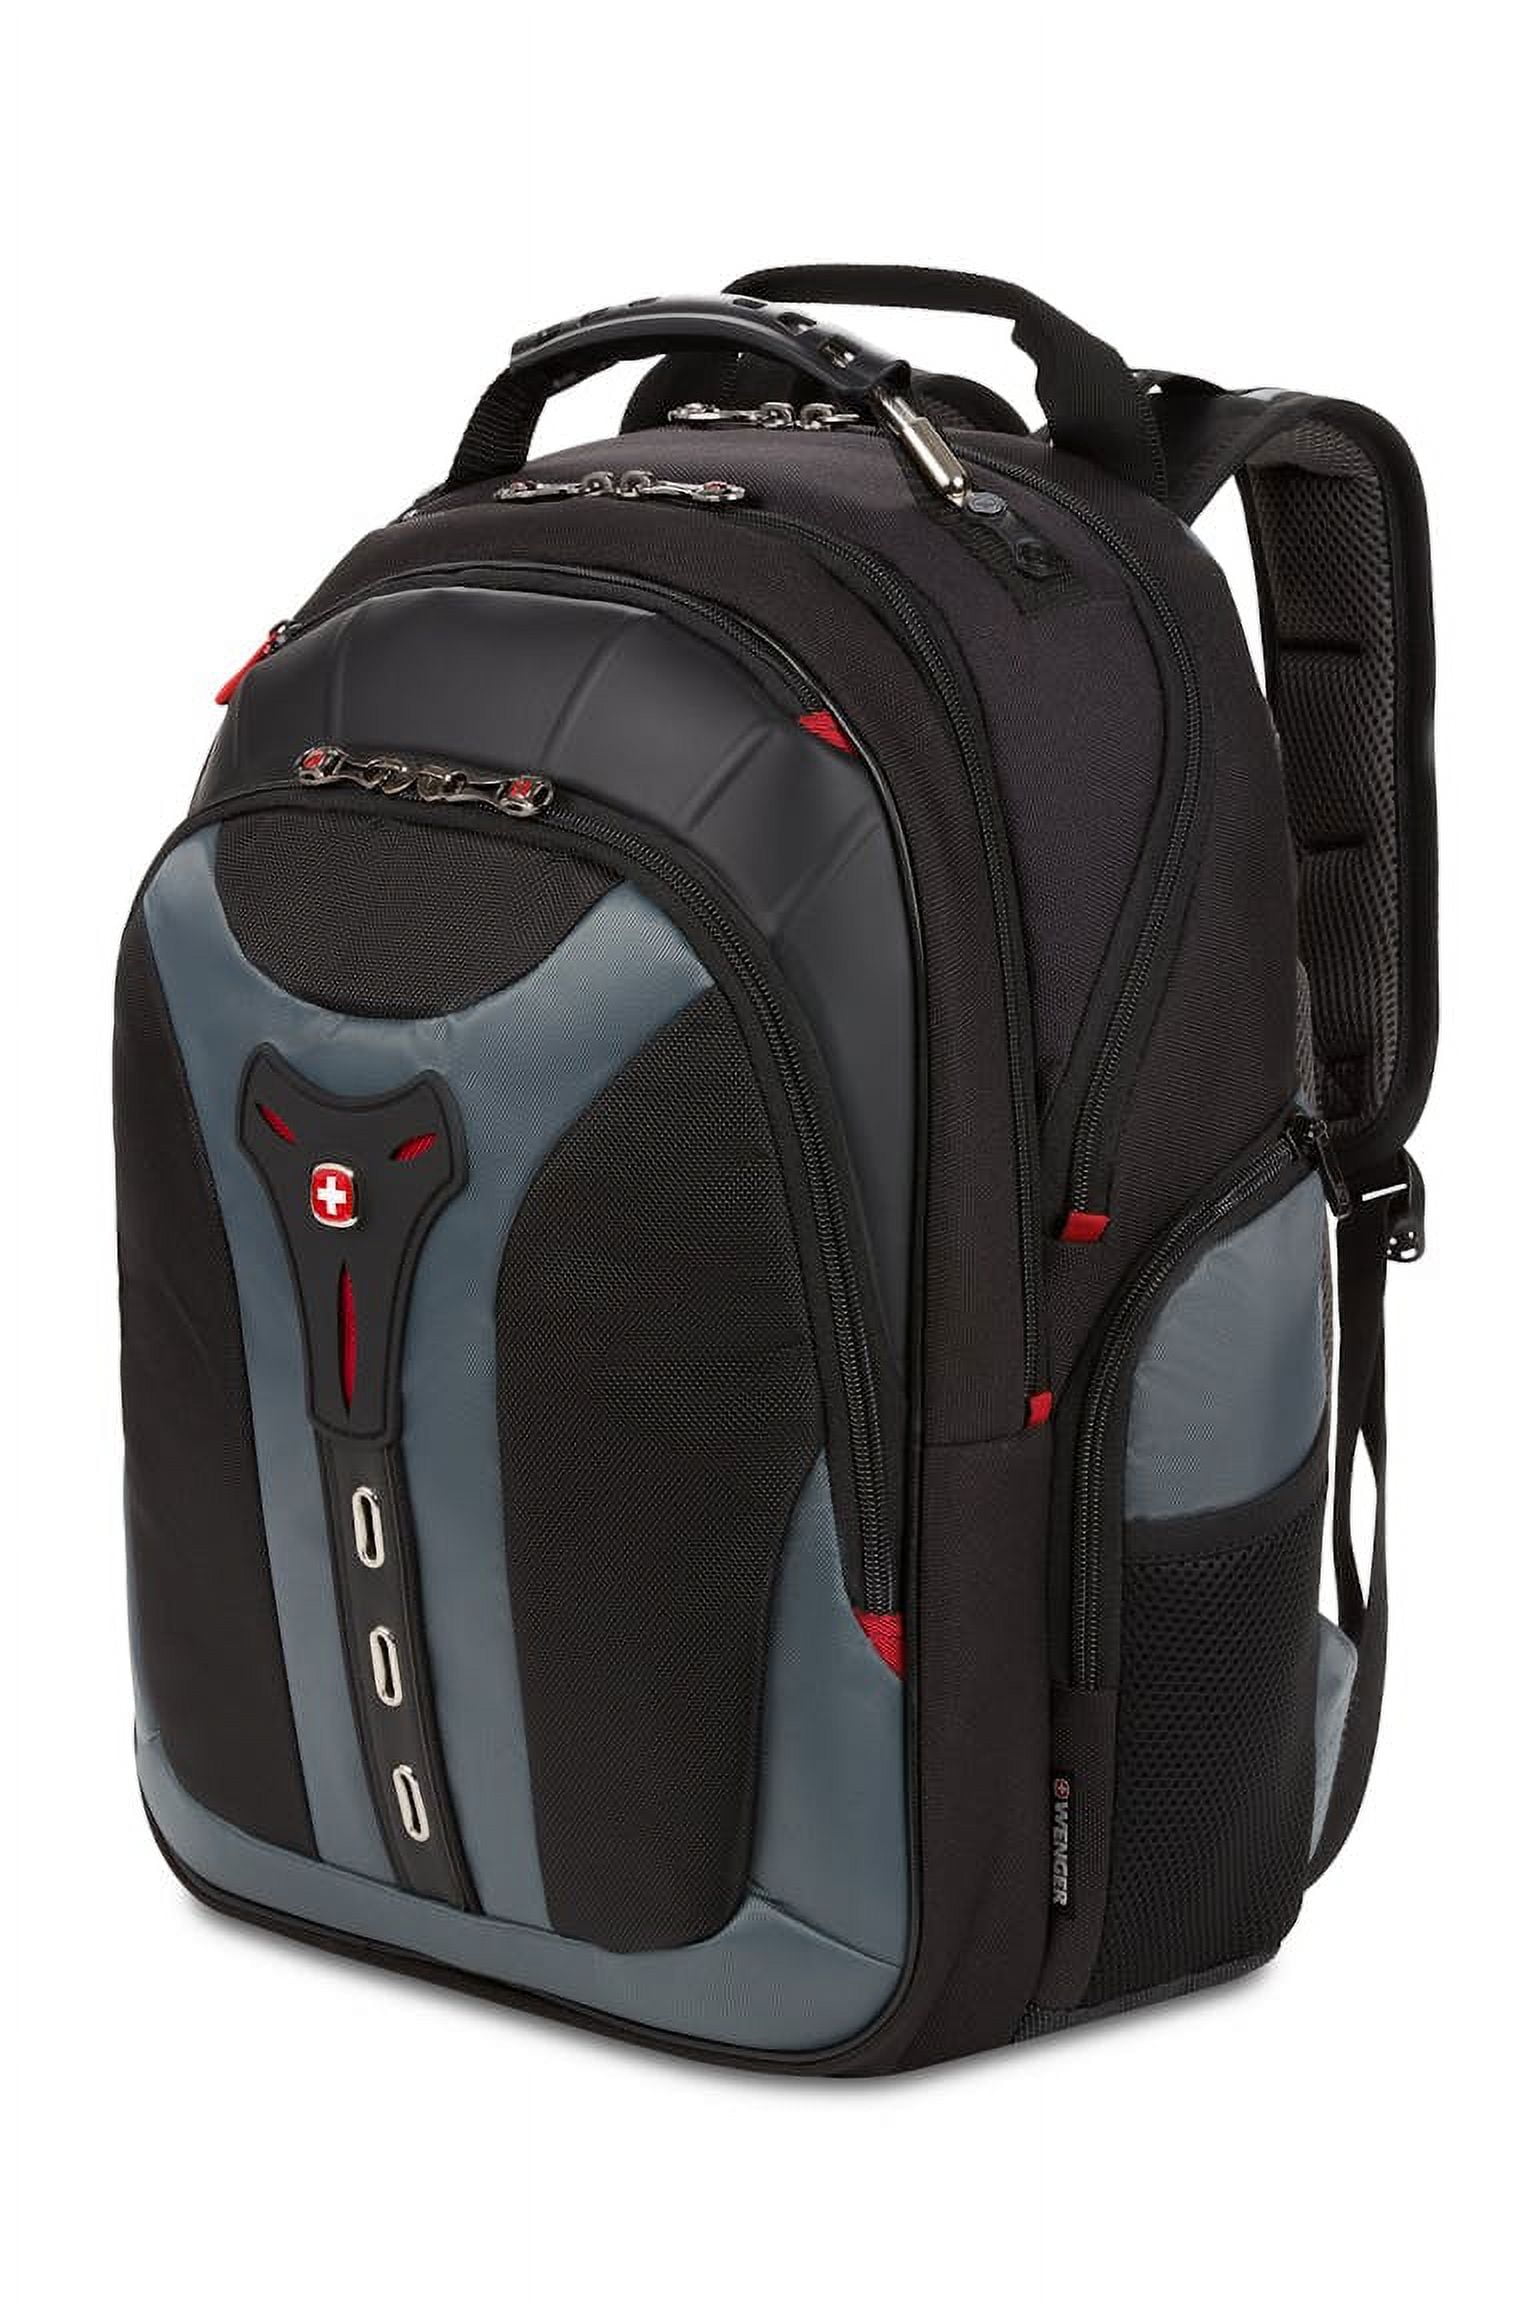 GA-7306-06F00 - Swissgear Pegasus 17 Laptop Backpack